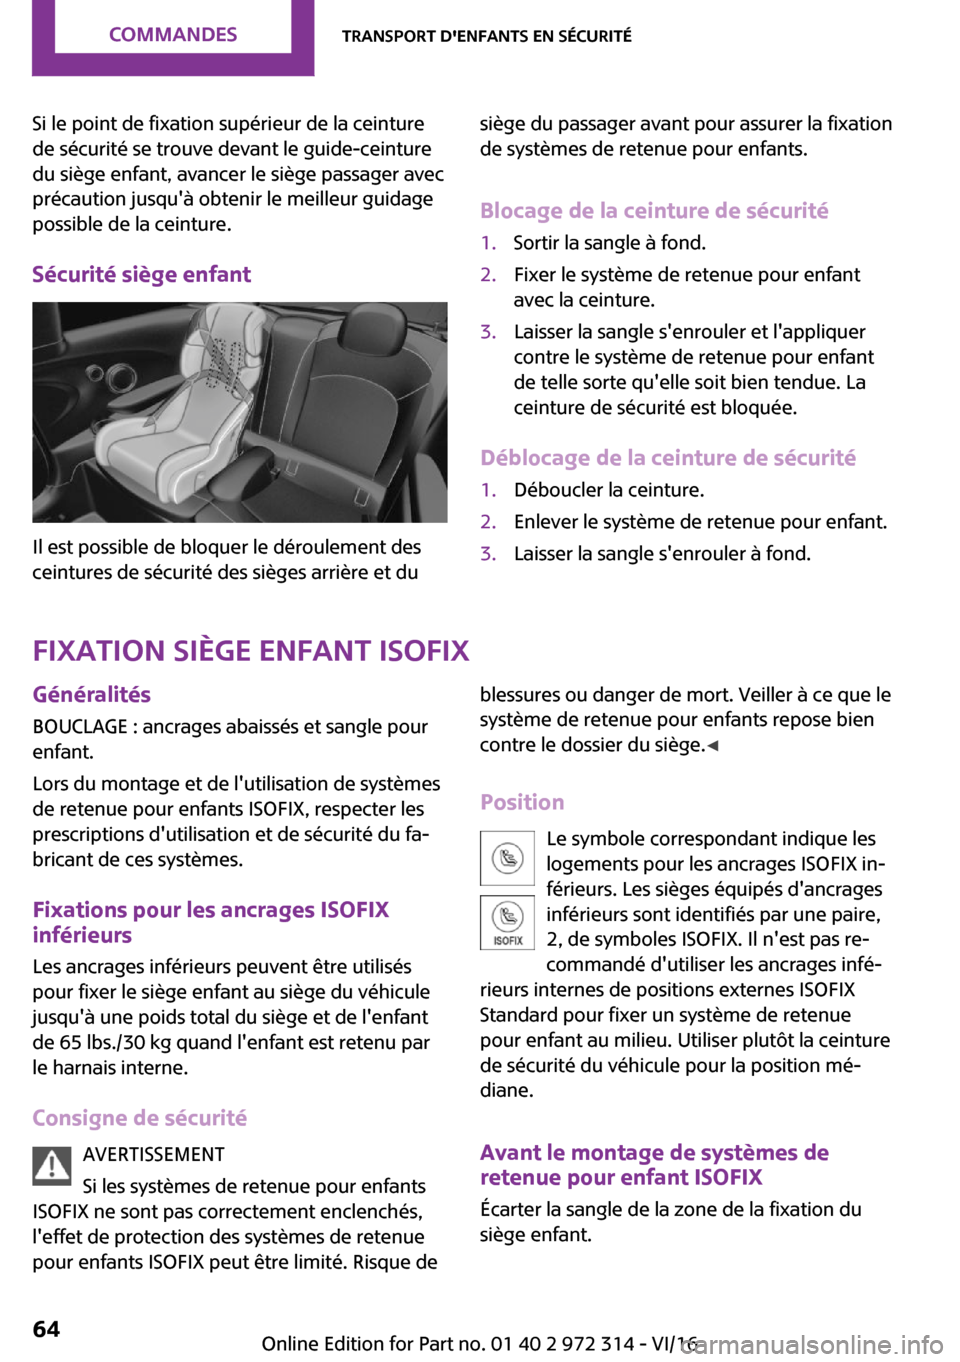 MINI 5 door 2016  Manuel du propriétaire (in French) �S�i� �l�e� �p�o�i�n�t� �d�e� �f�i�x�a�t�i�o�n� �s�u�p�é�r�i�e�u�r� �d�e� �l�a� �c�e�i�n�t�u�r�e
�d�e� �s�é�c�u�r�i�t�é� �s�e� �t�r�o�u�v�e� �d�e�v�a�n�t� �l�e� �g�u�i�d�e�-�c�e�i�n�t�u�r�e
�d�u� �